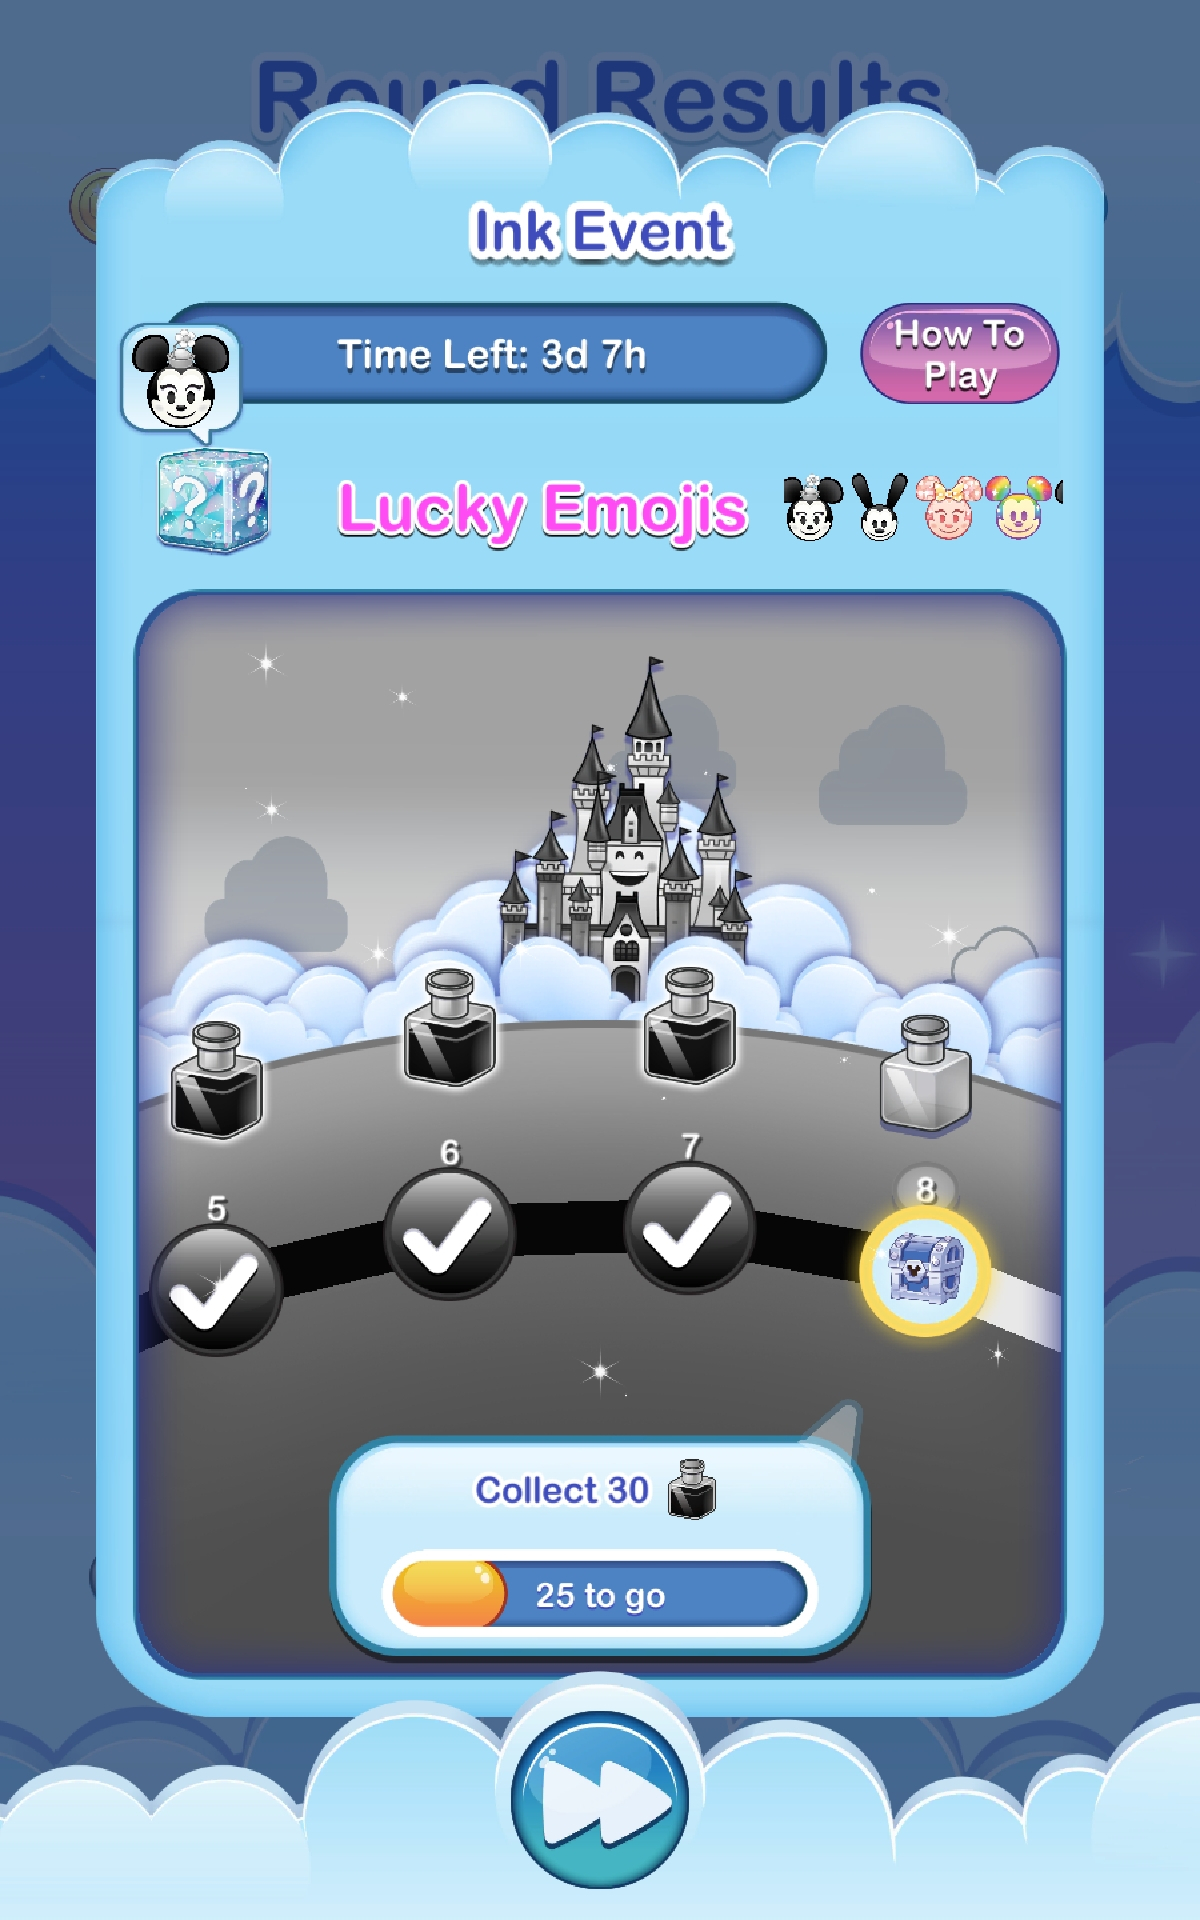 This Ink Clear Event Is So Pretty : Disneyemojiblitz throughout Emoji Blitz Event Calendar